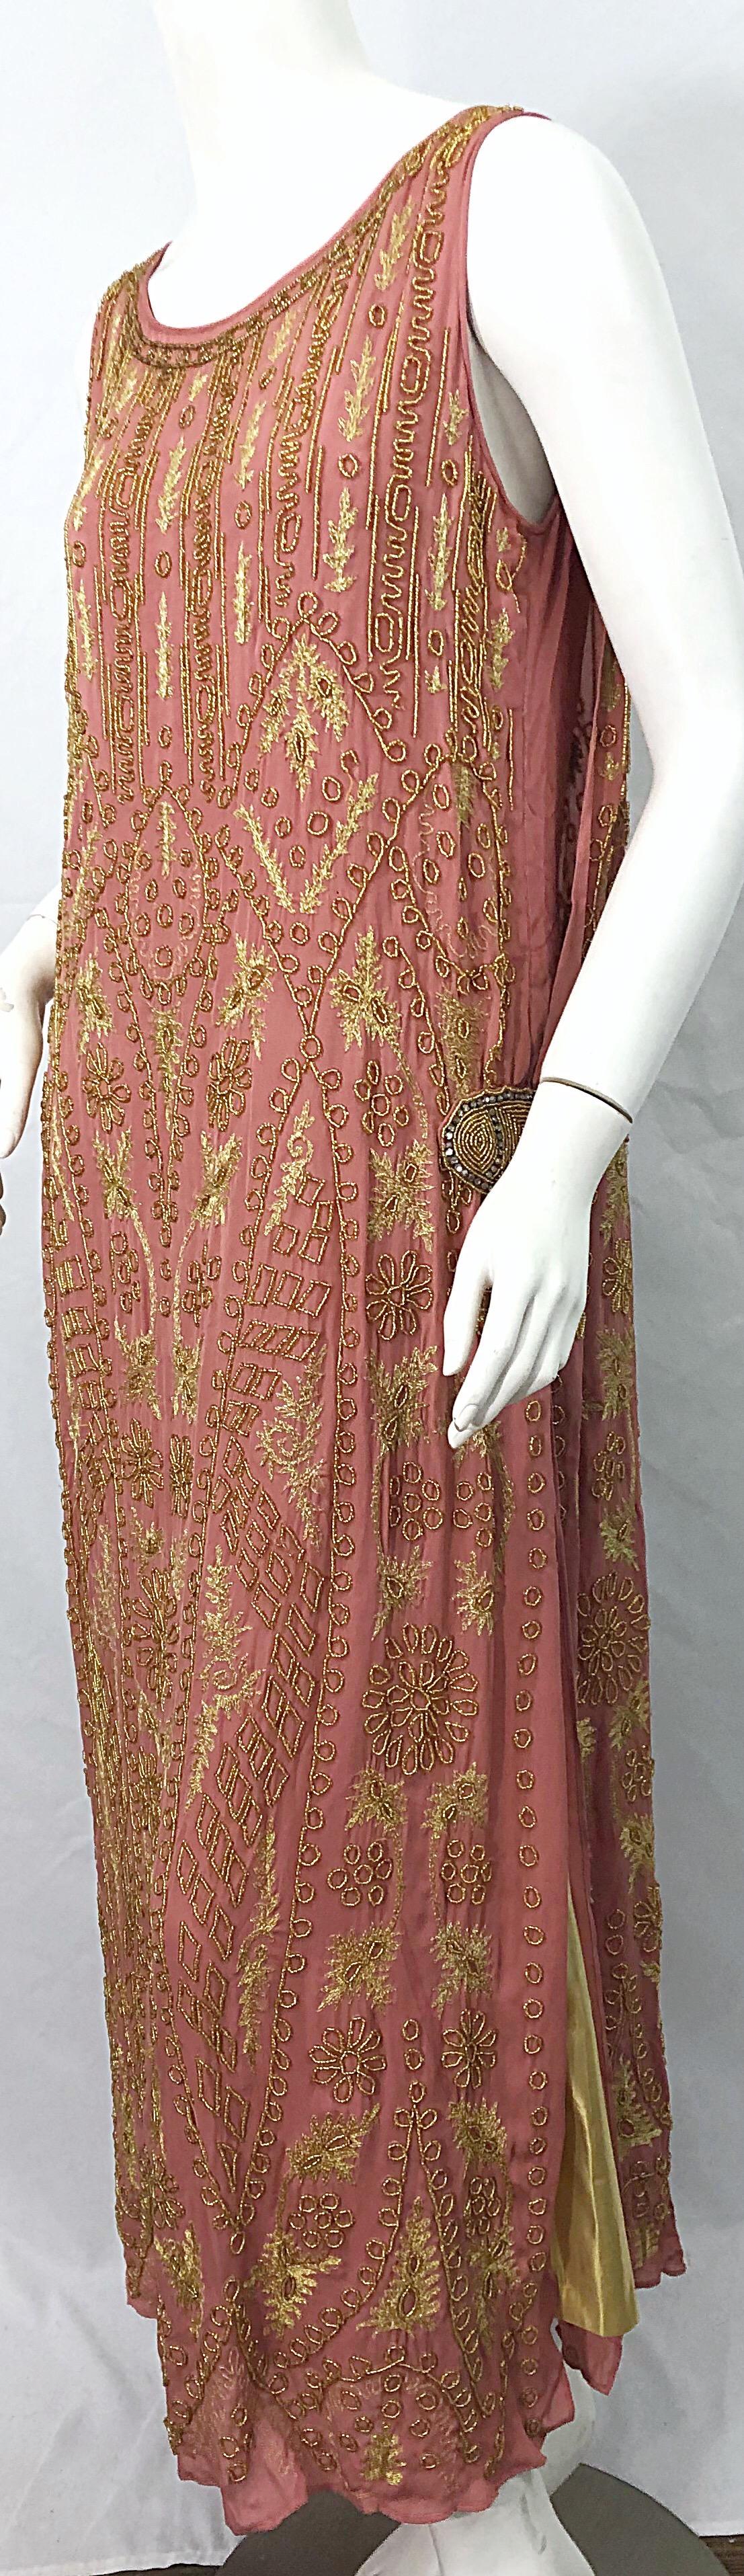 vintage gatsby dress